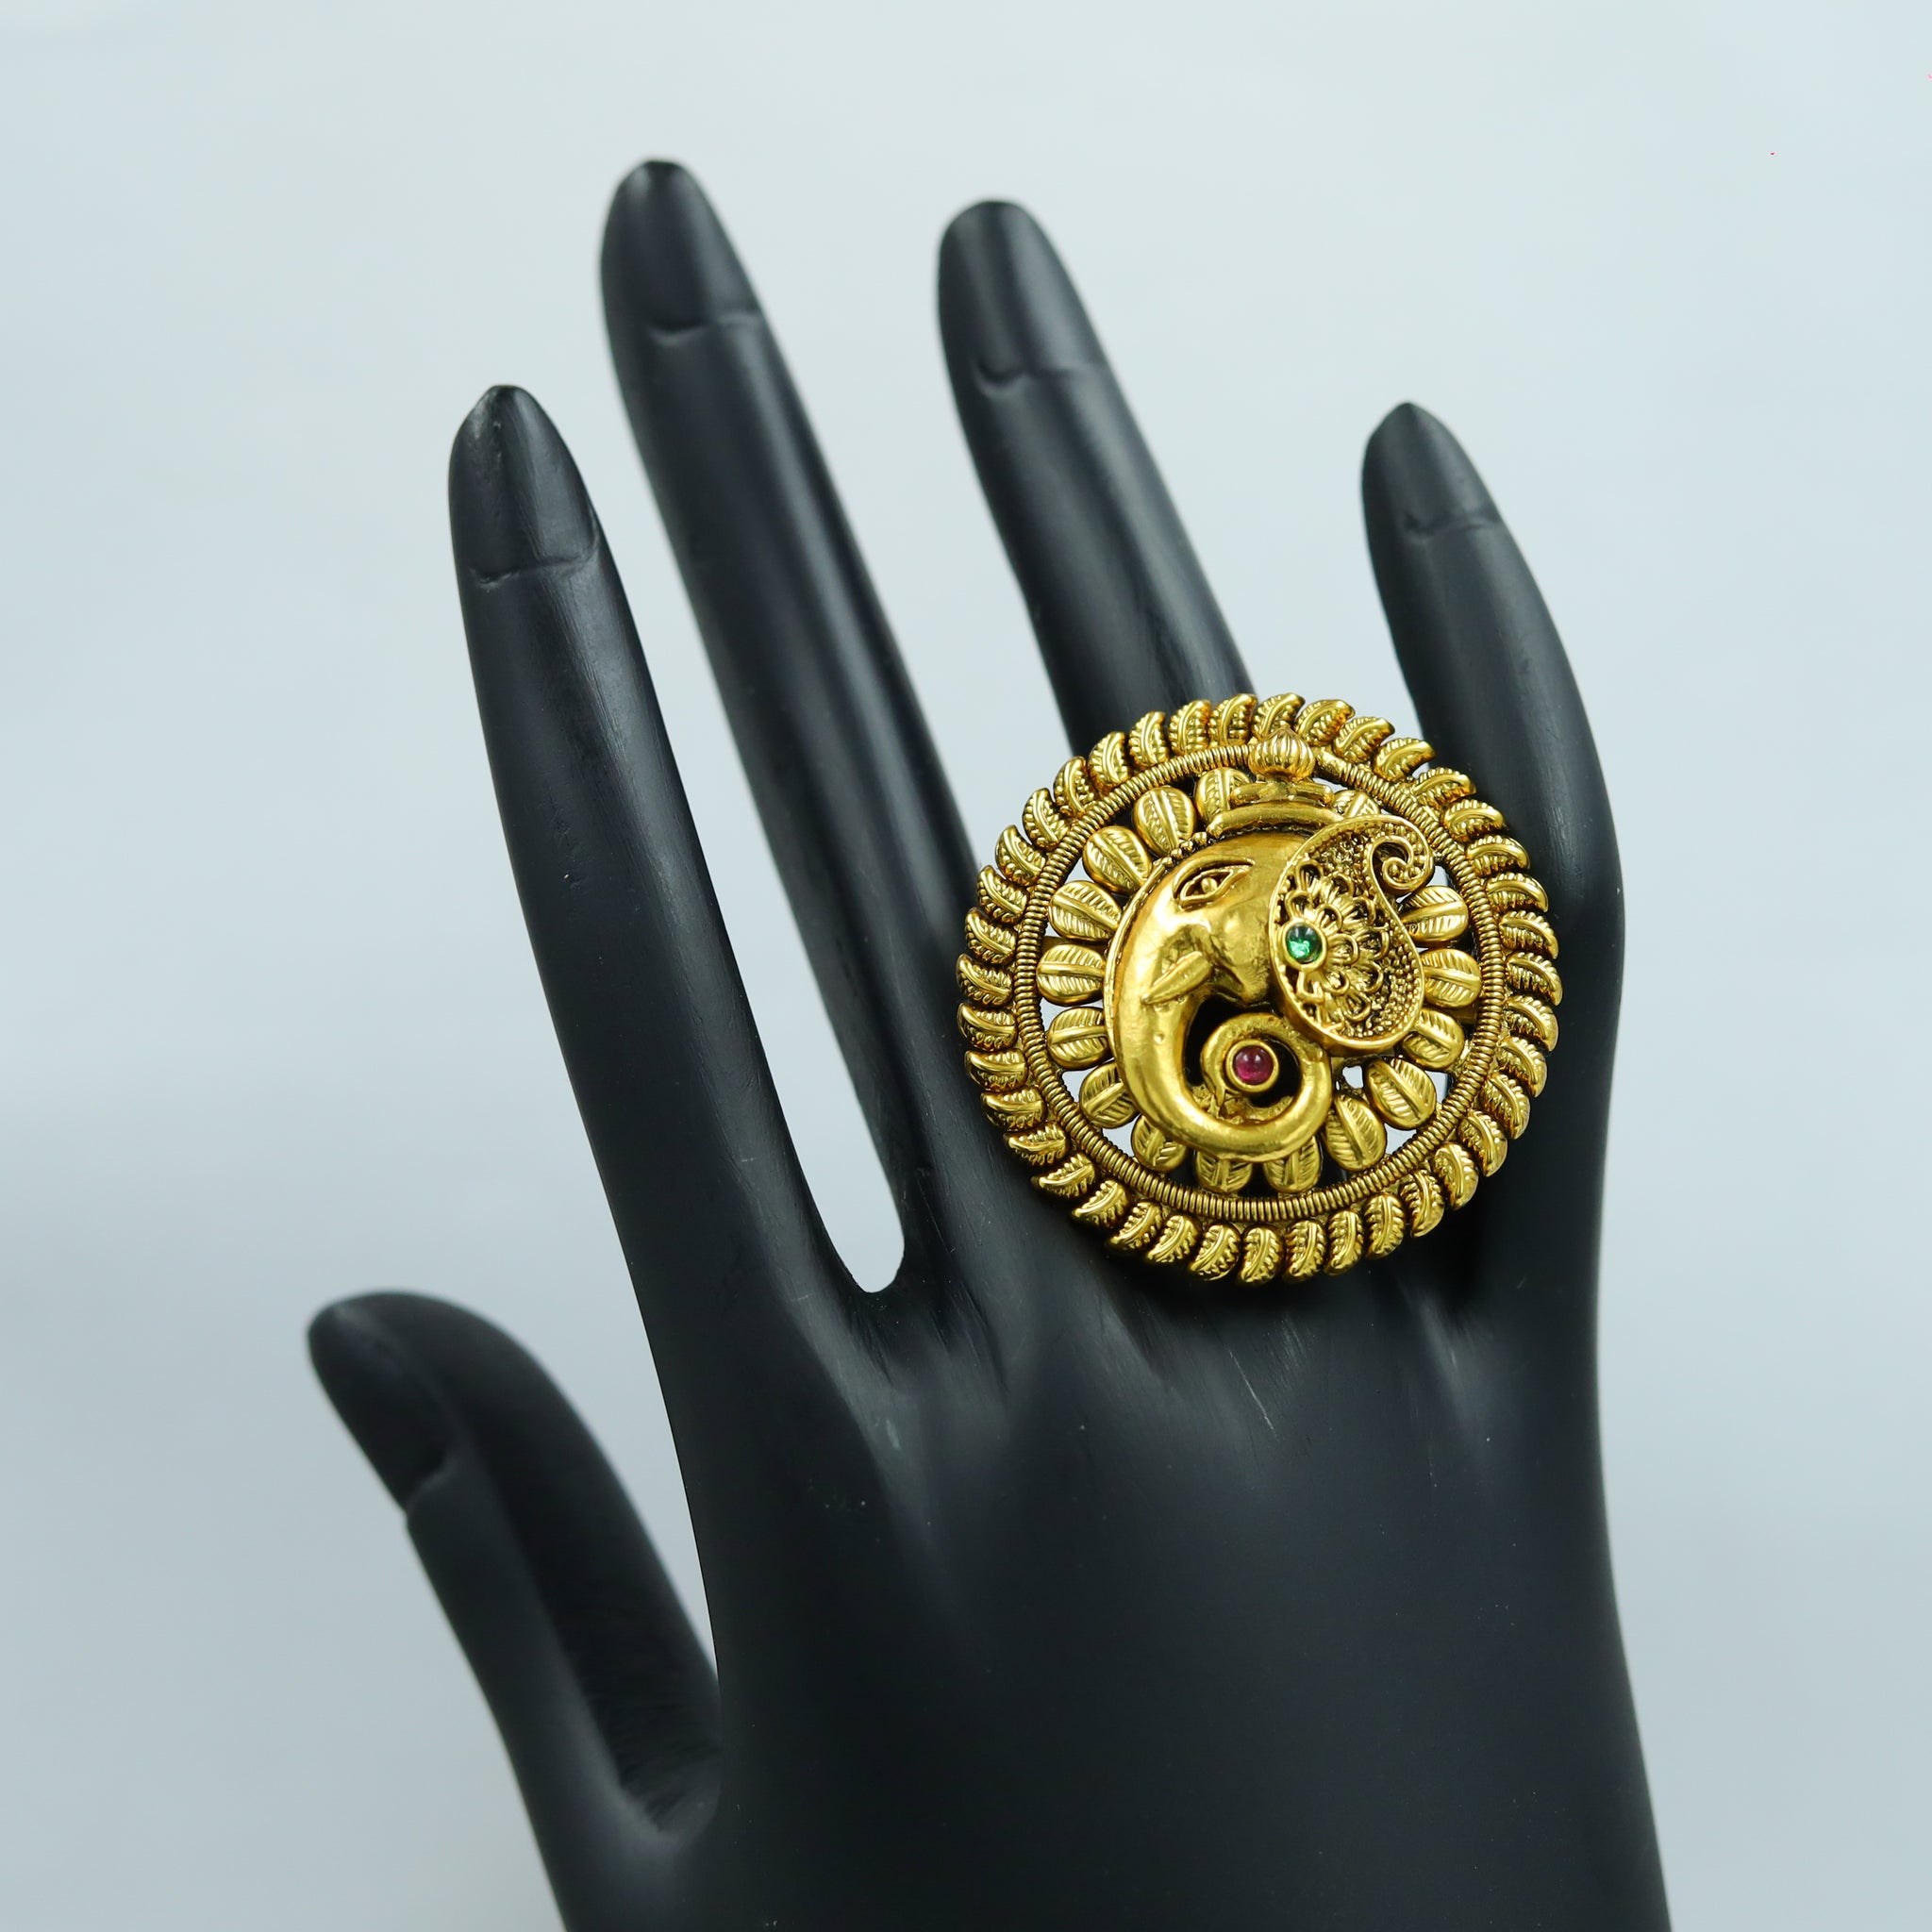 Antique Gold Finish Ring 12215-28